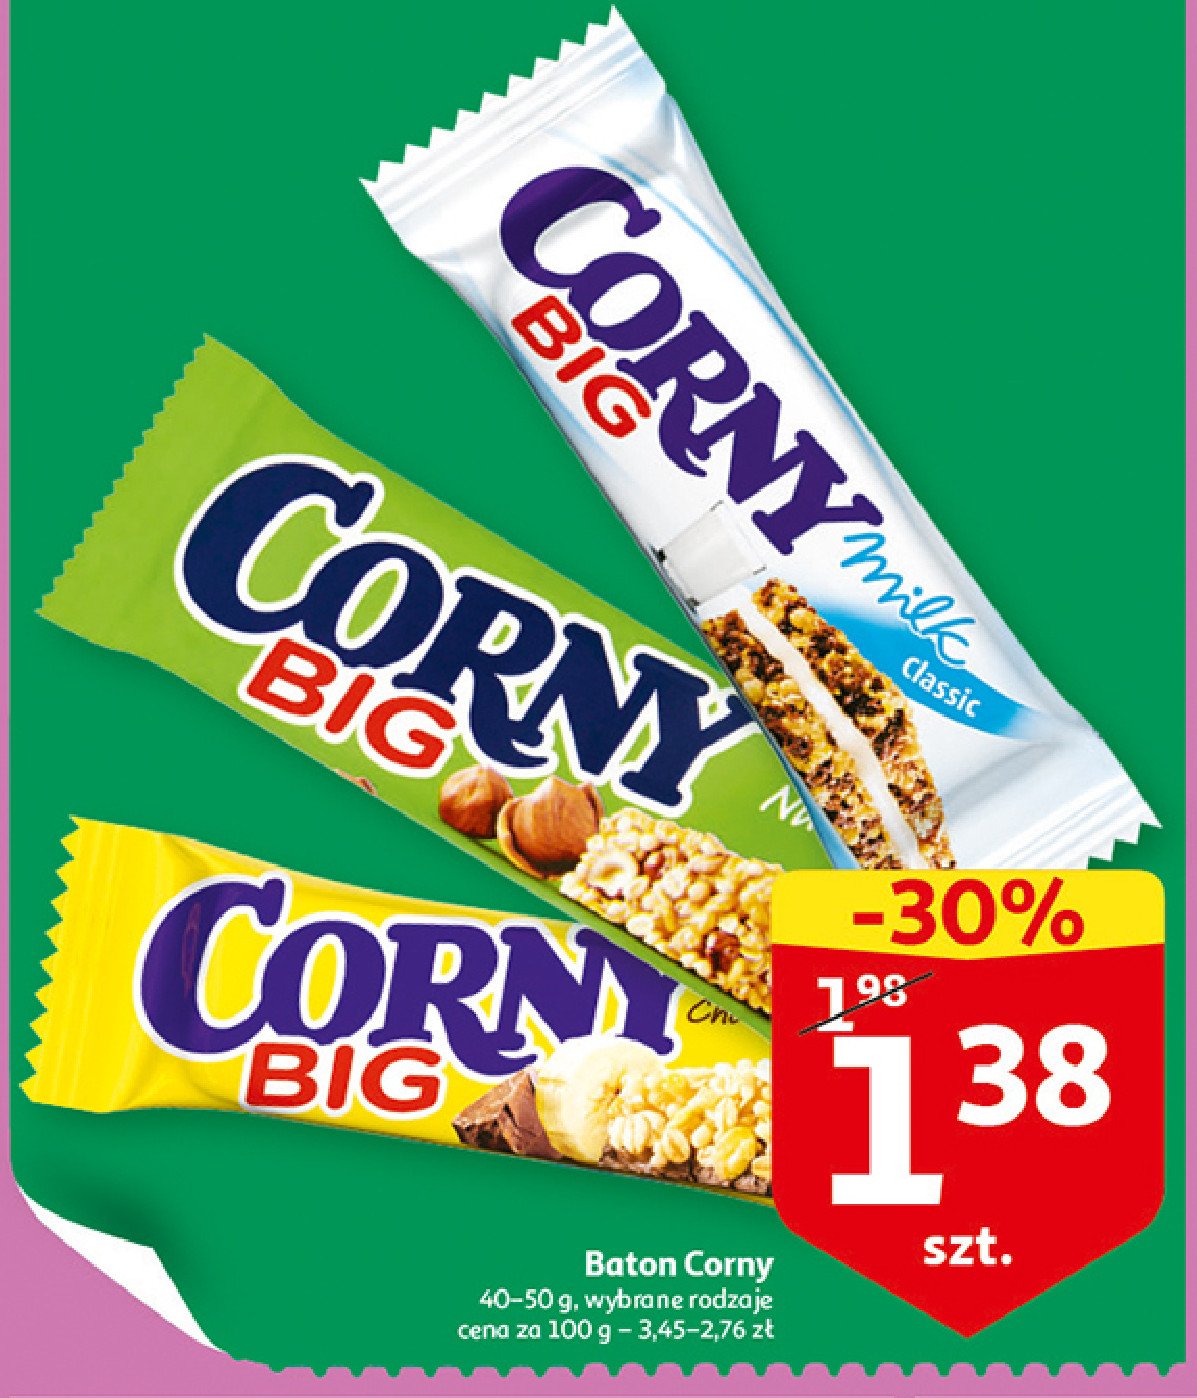 Baton nuts Corny milk big promocja